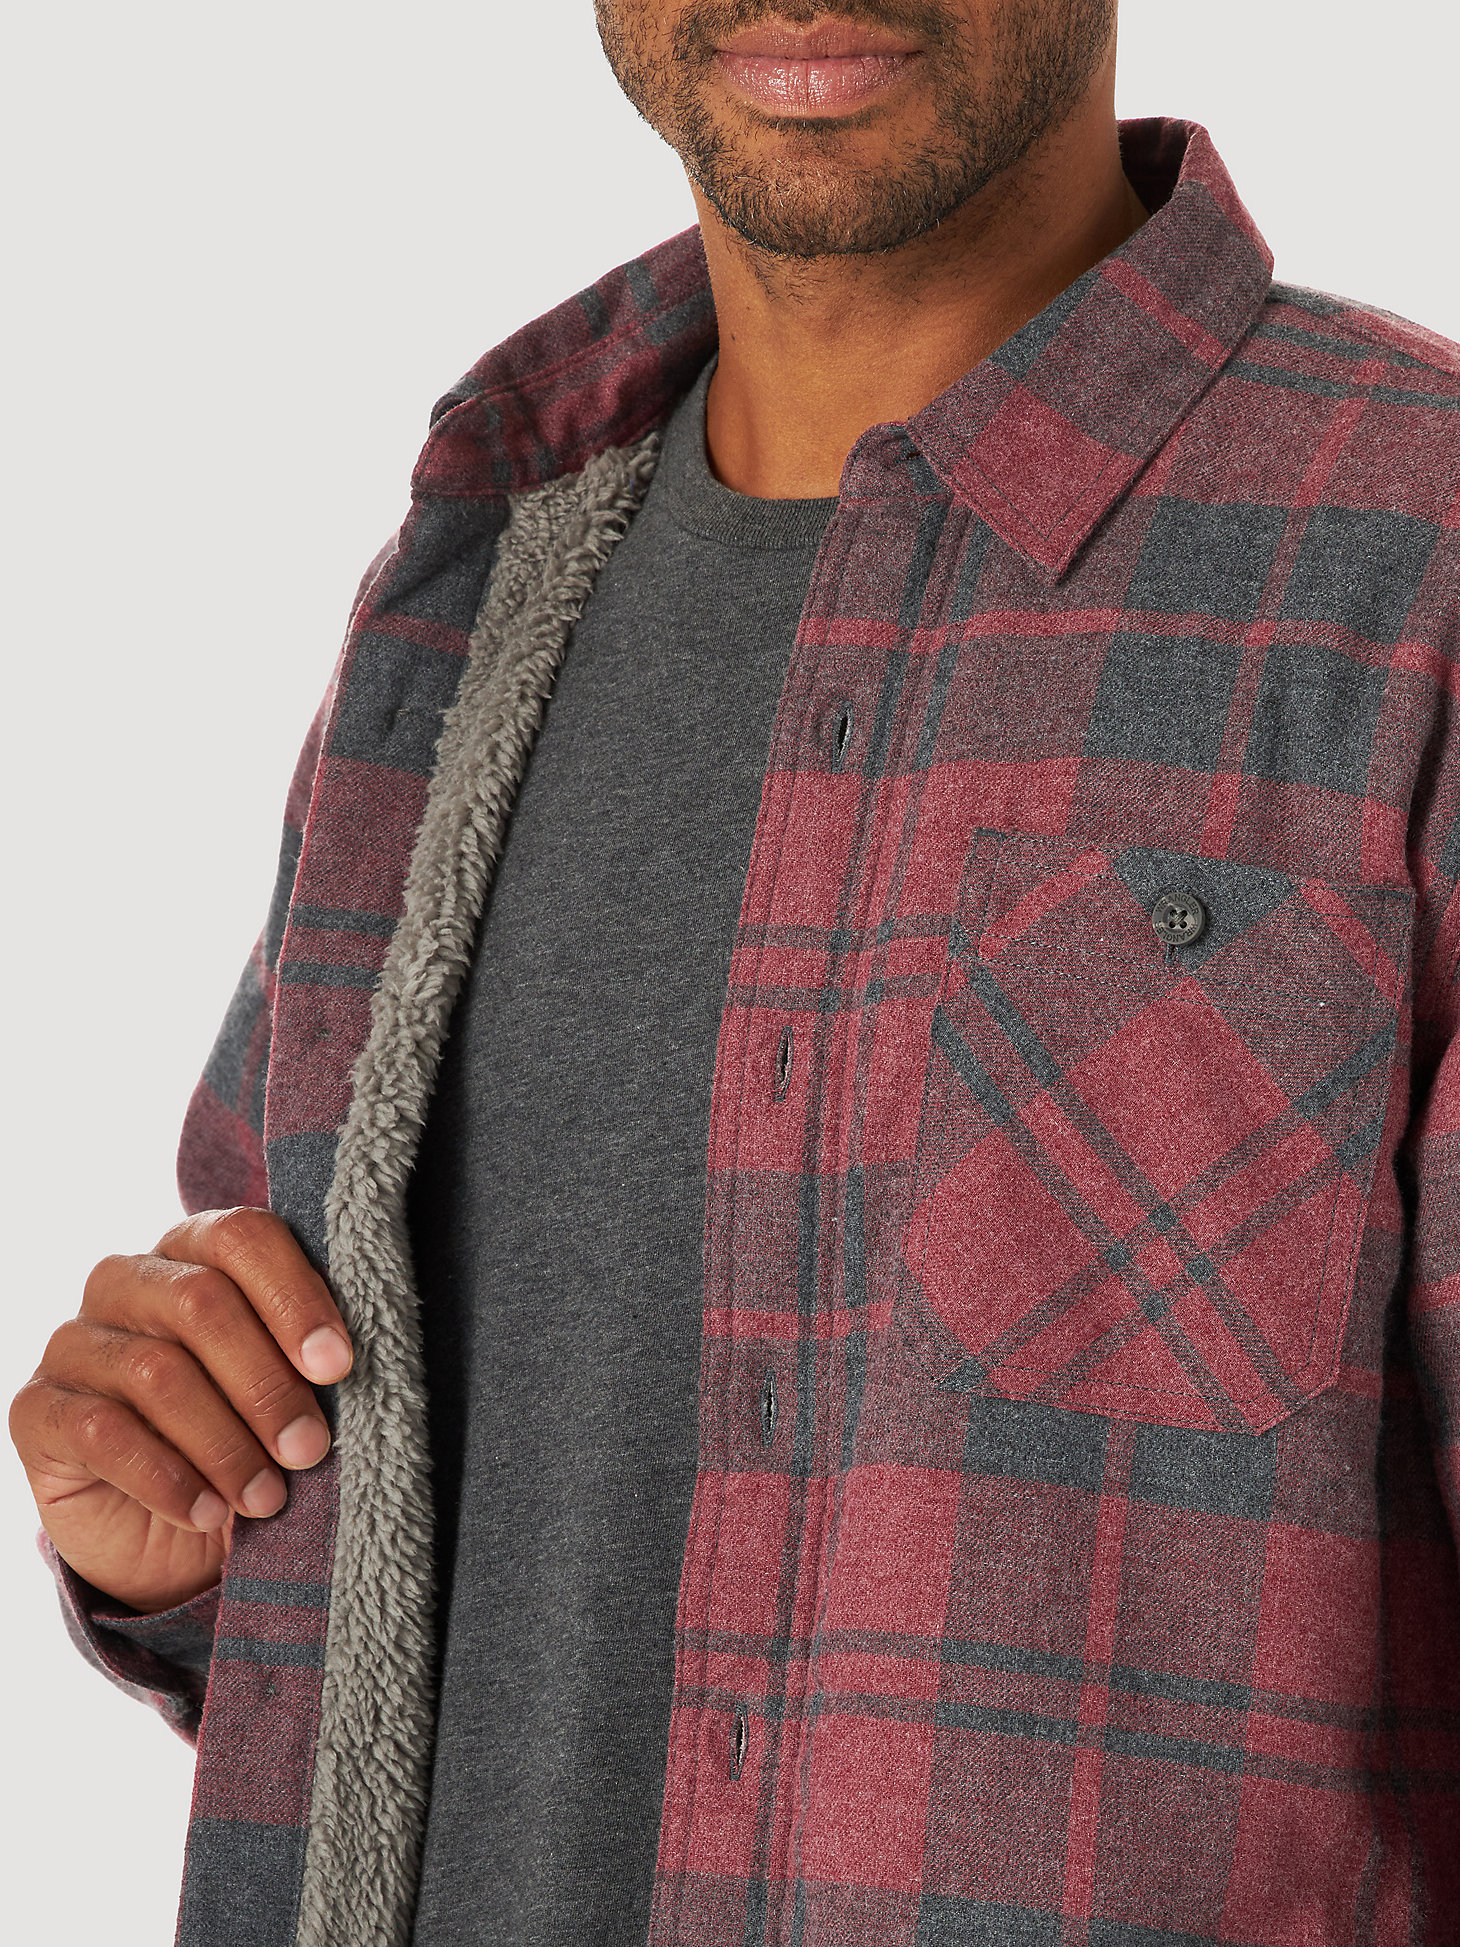 Men's Wrangler® Authentics Sherpa Lined Flannel Shirt in Zinfindel Heather alternative view 2